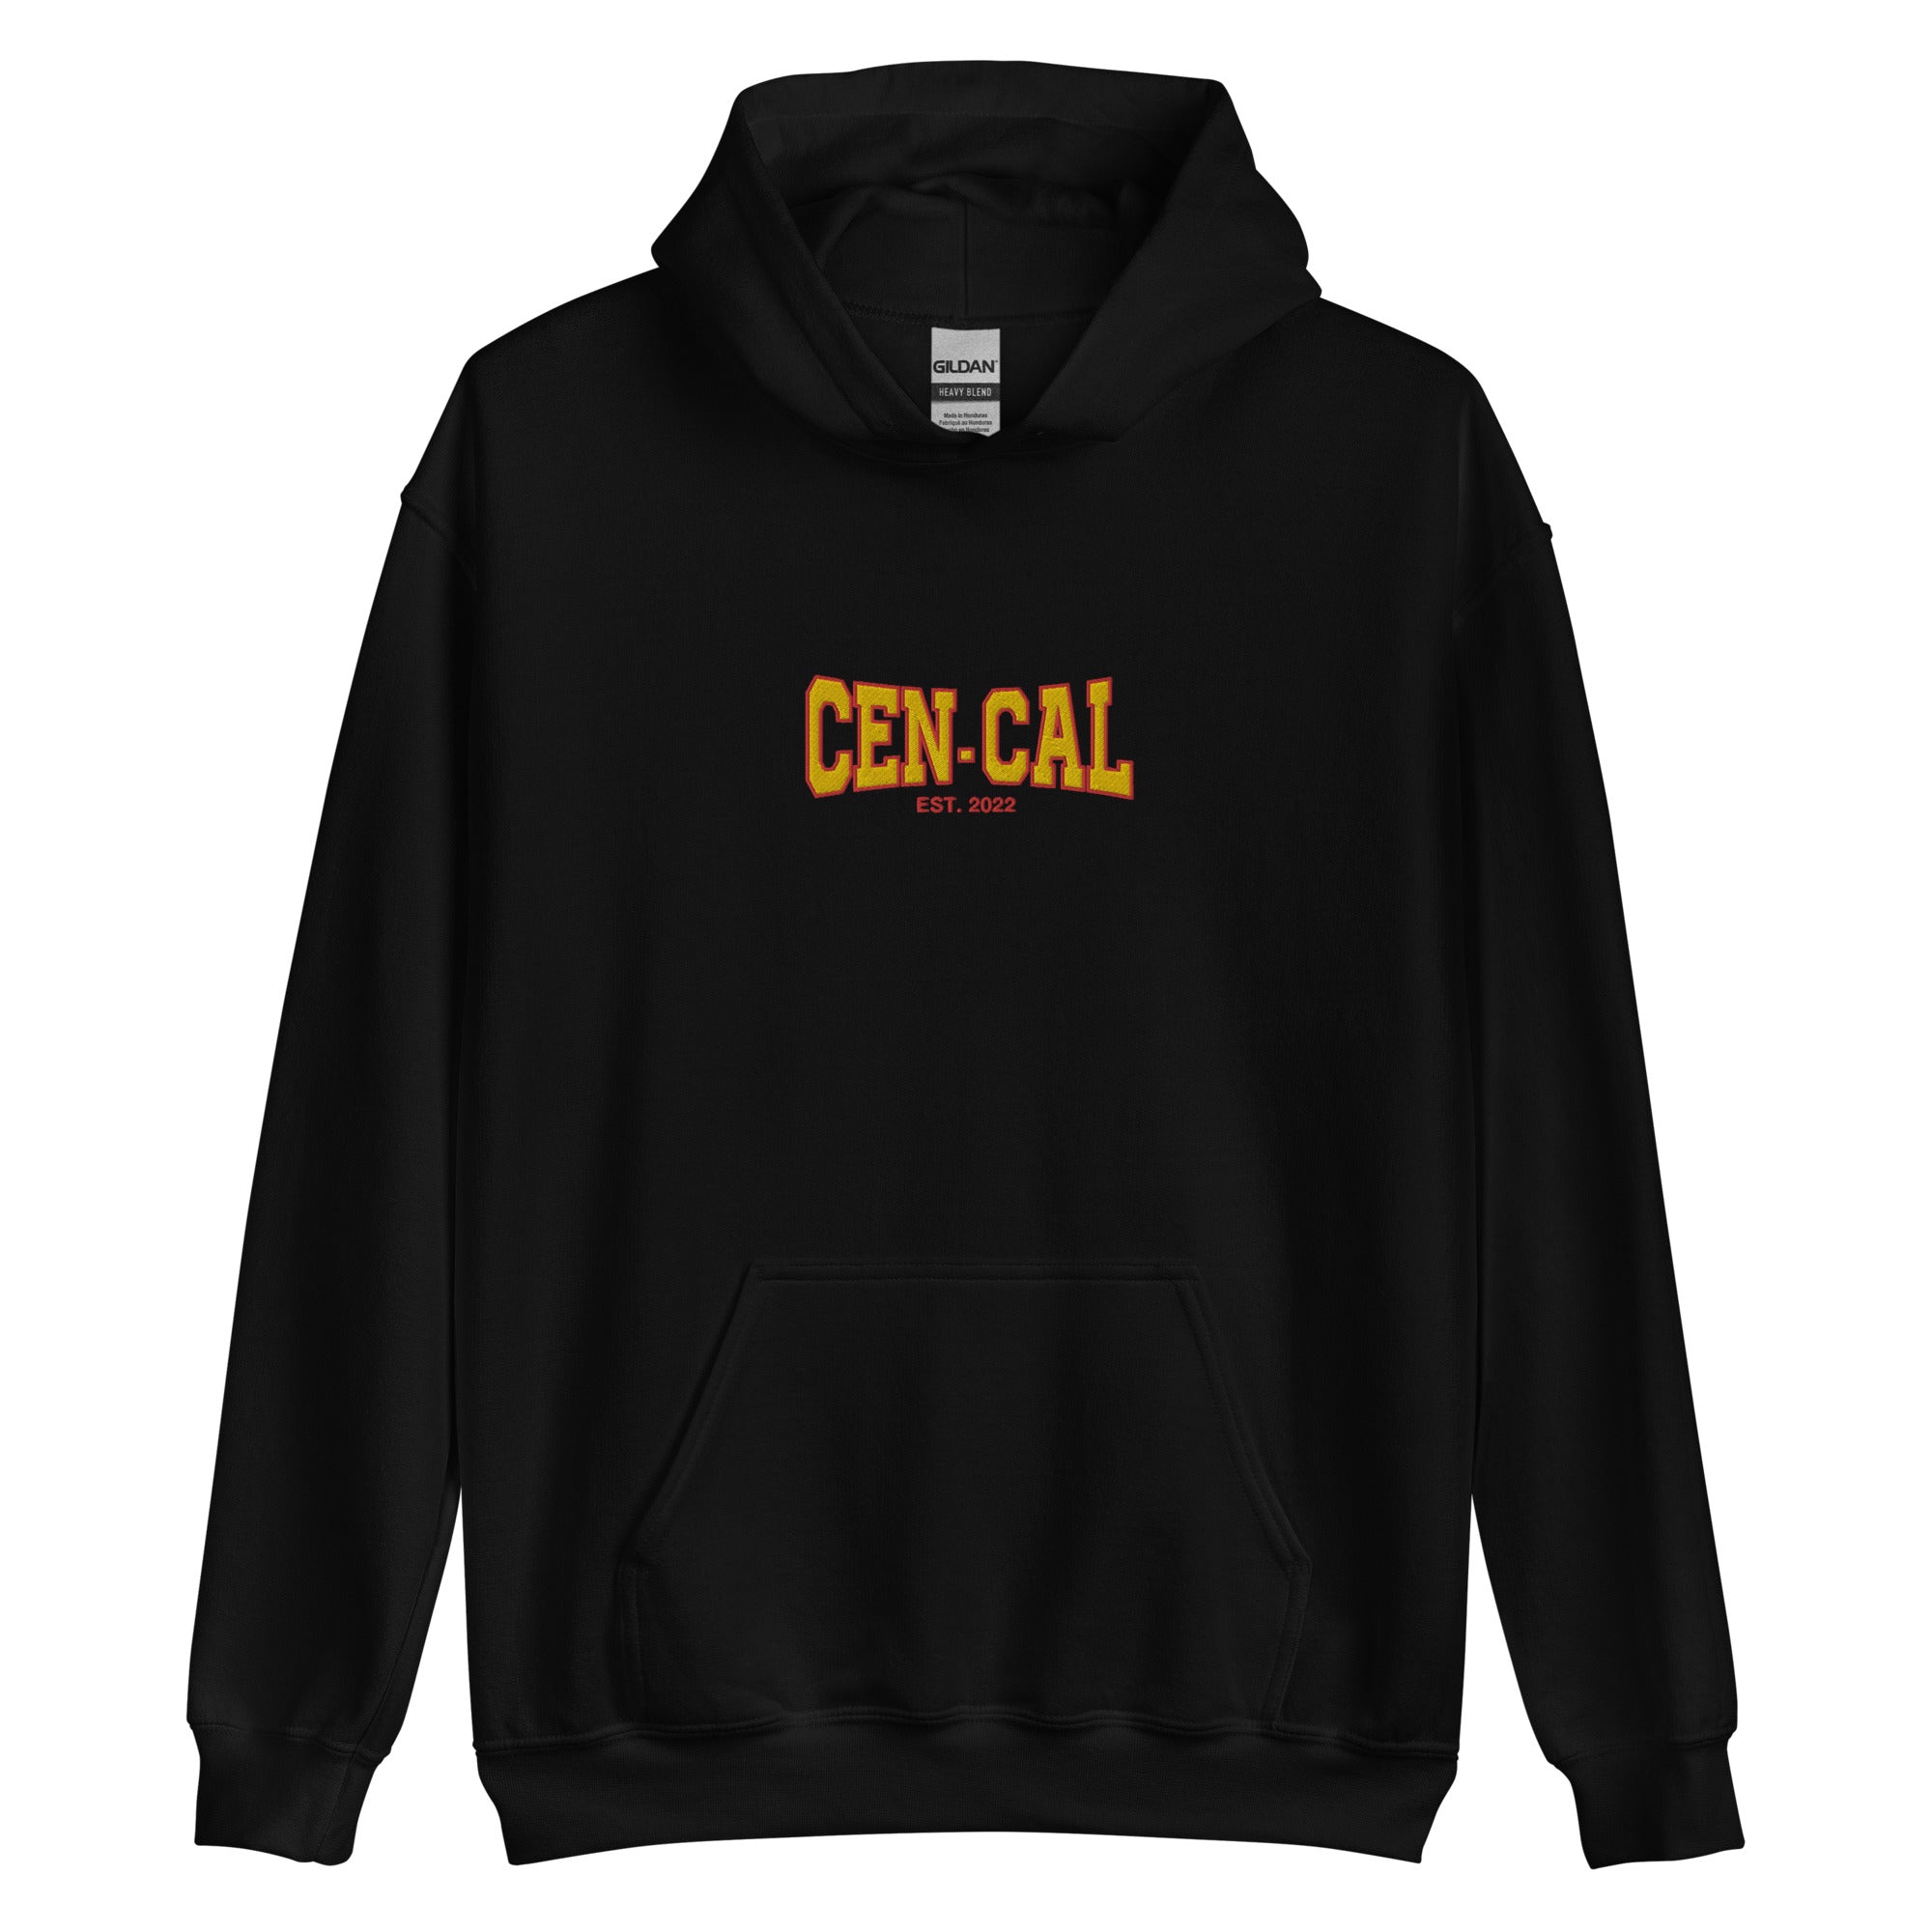 Cen-Cal "EST" Hoodie